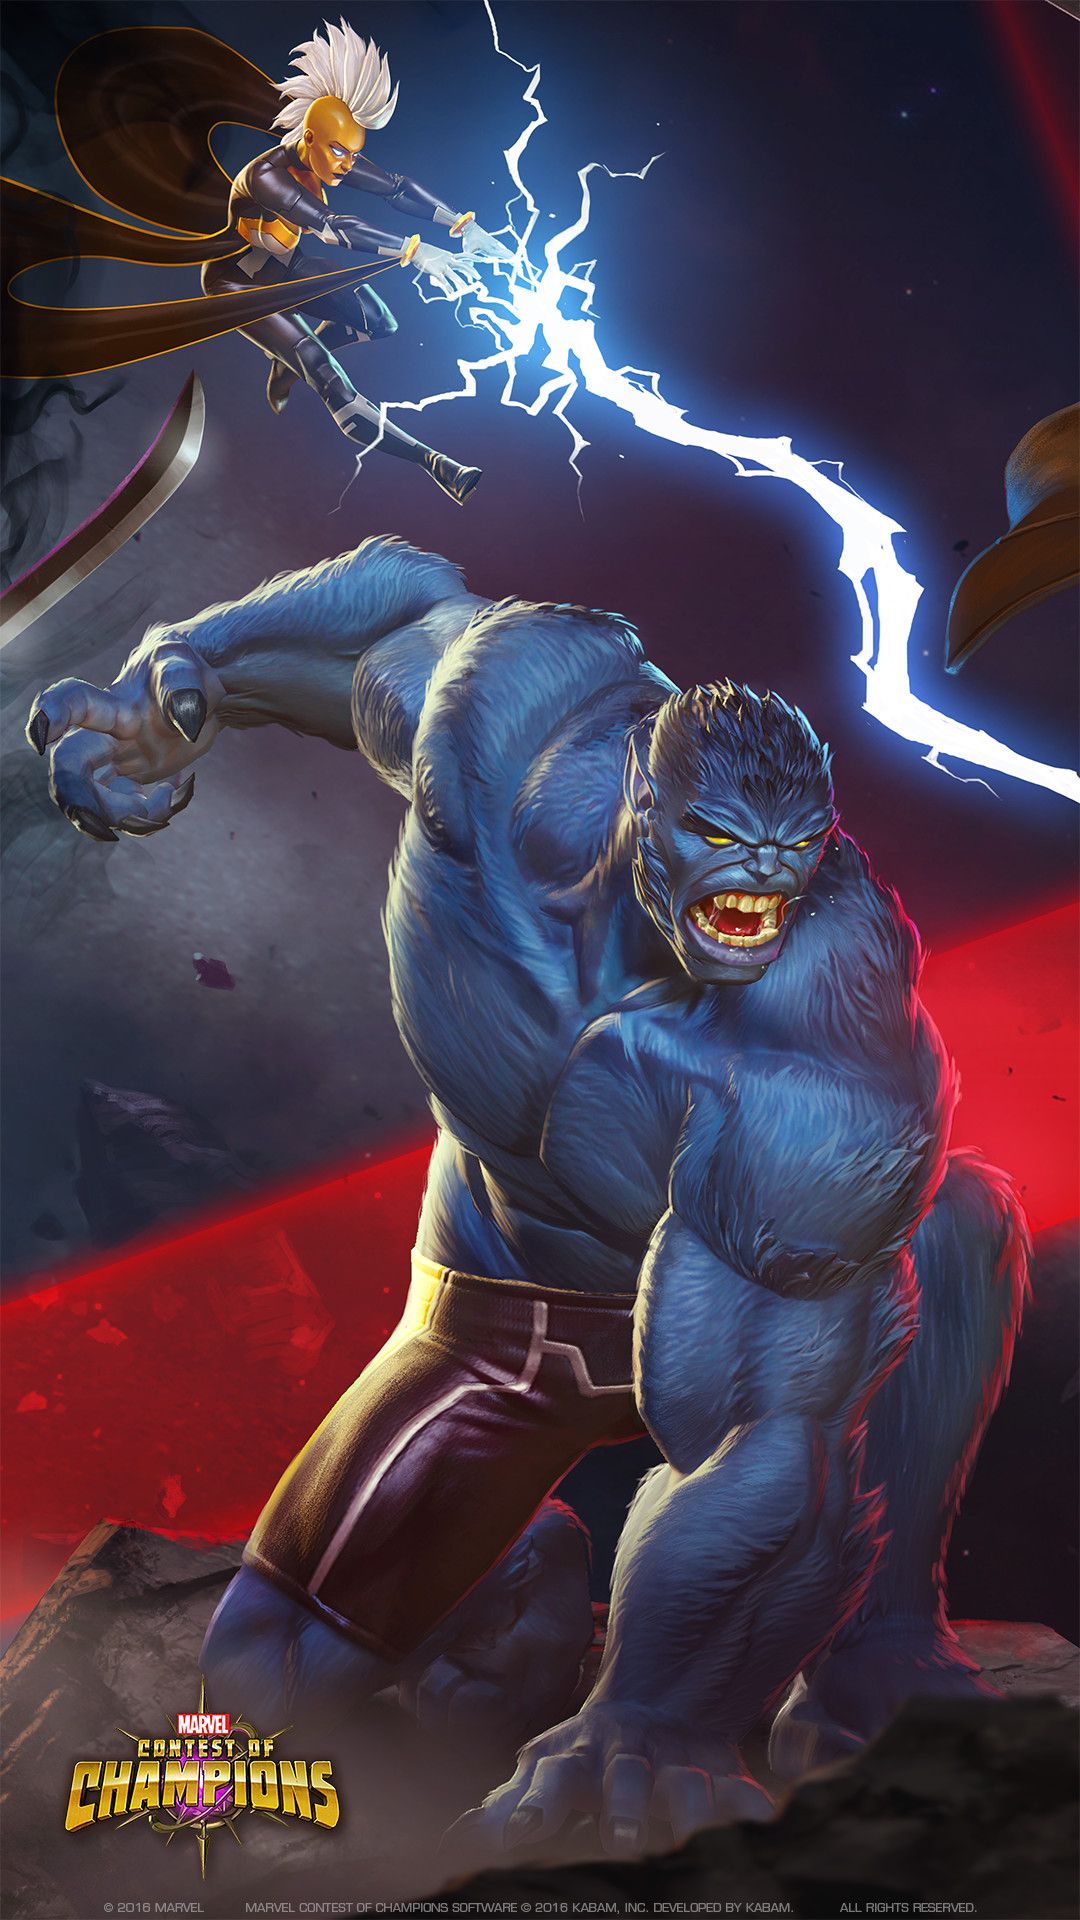 The Beast X-Men Dark Phoenix Nicholas Hoult Poster Wallpapers